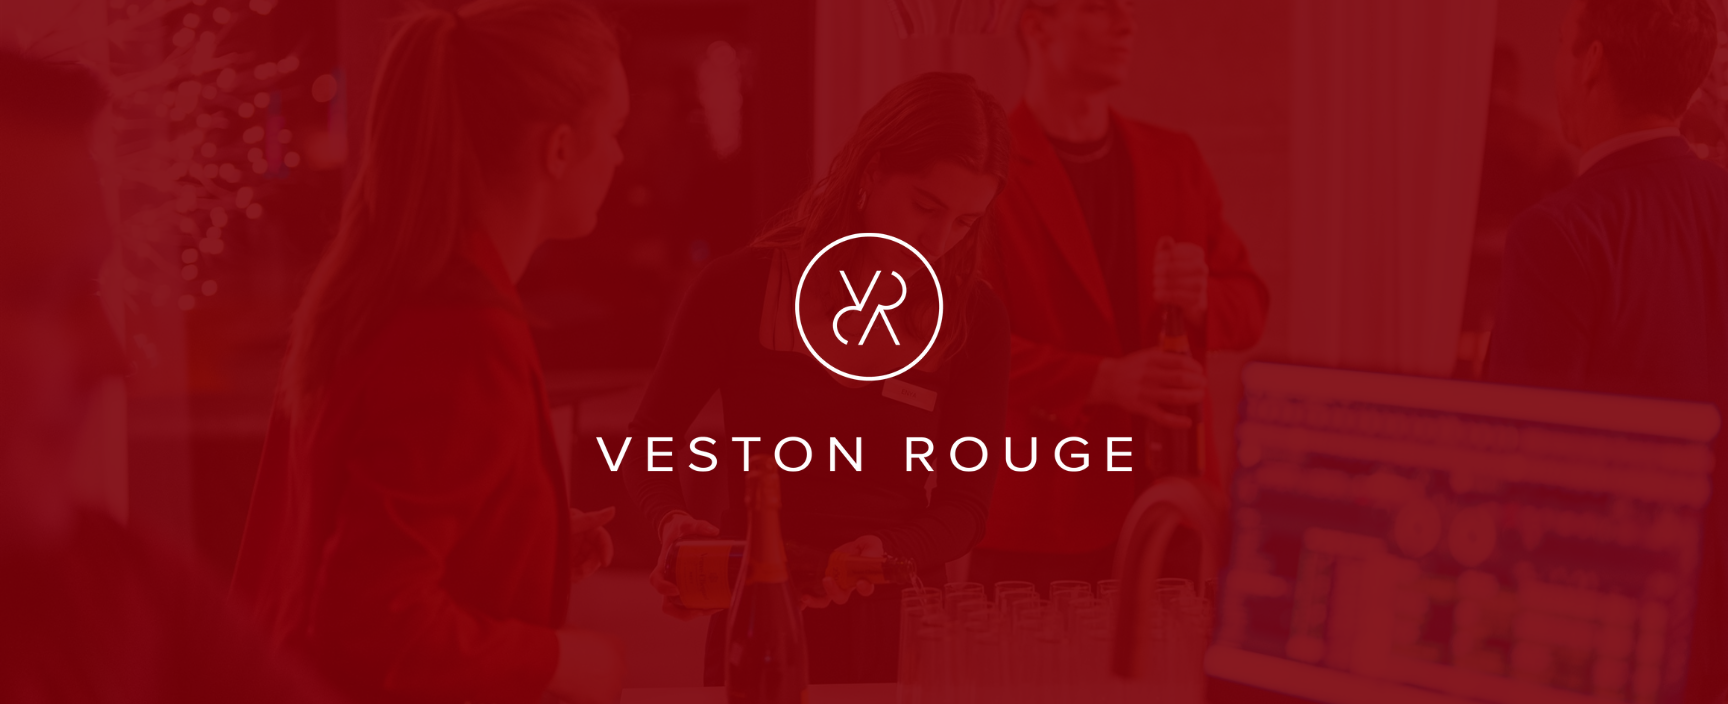 Banniere-veston rouge-realisation-marketing-studio-360